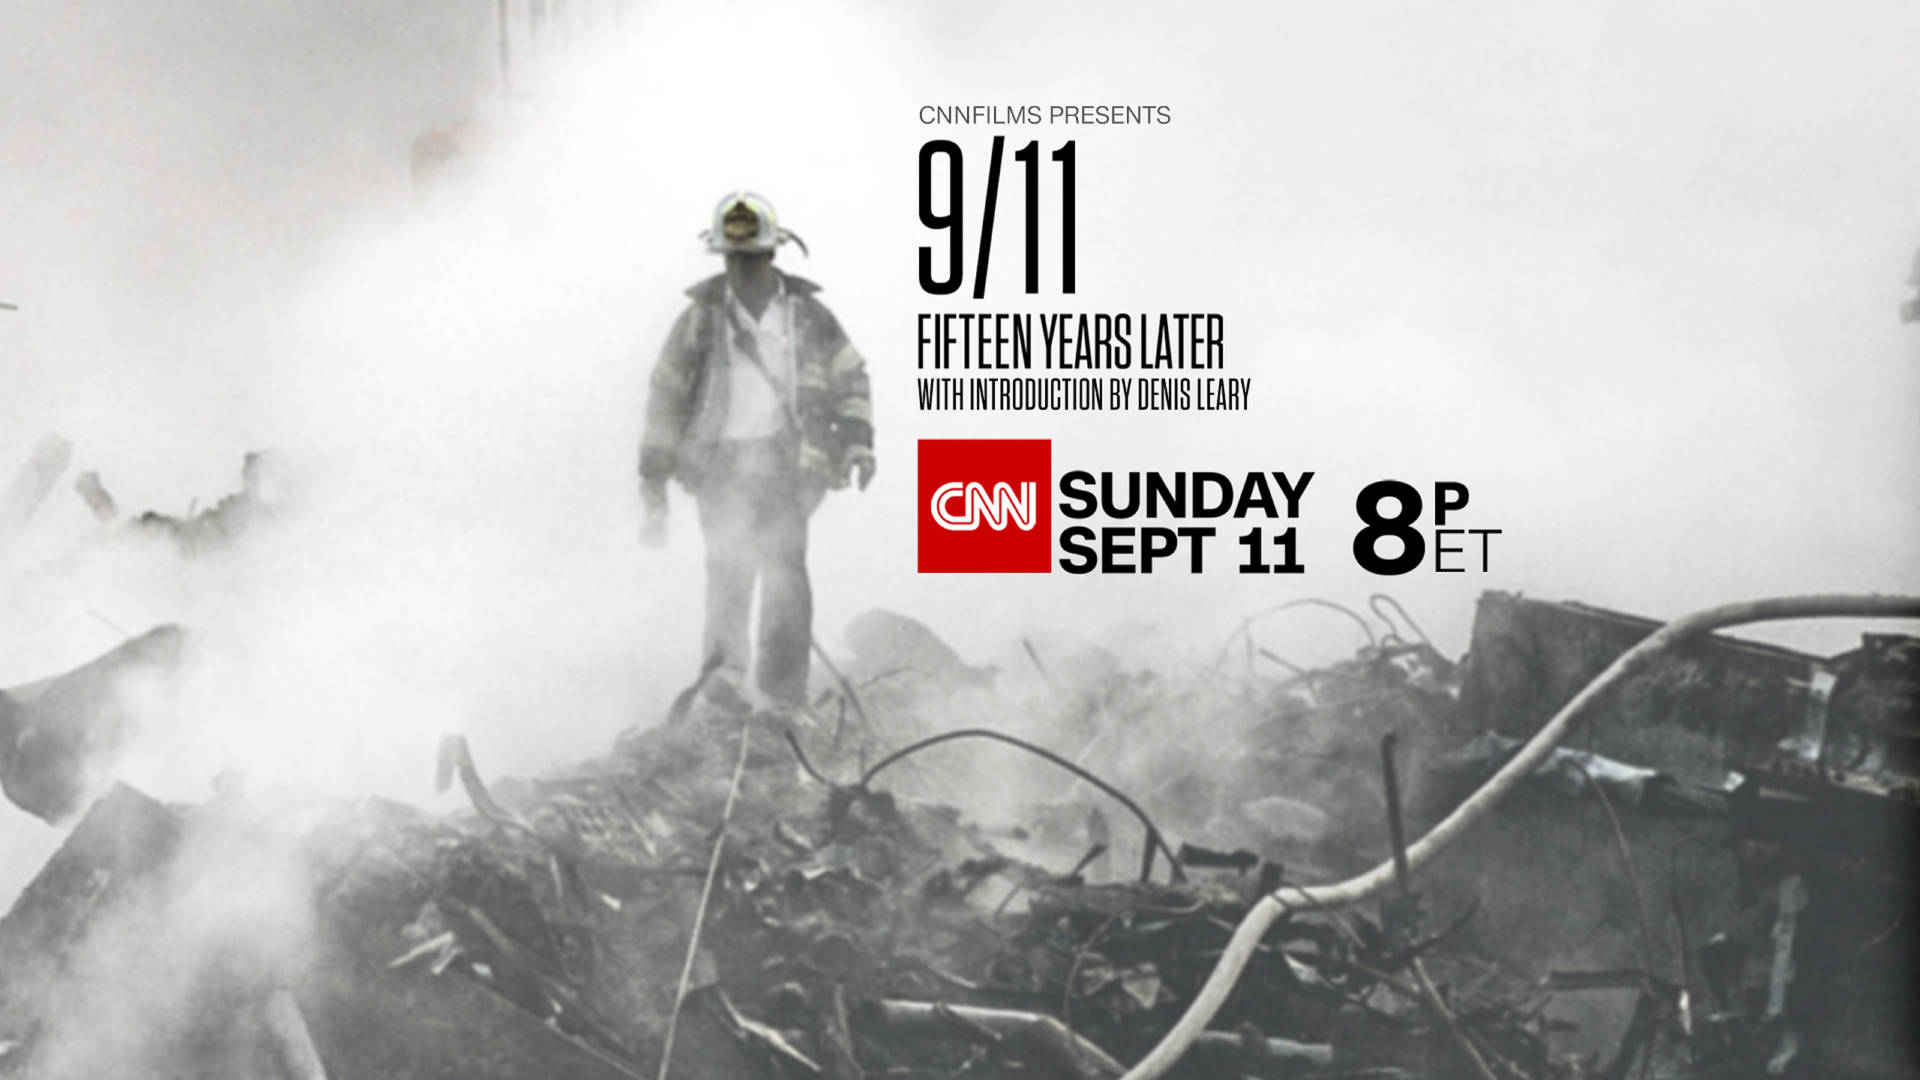 Cnn 9/11 Promo Background